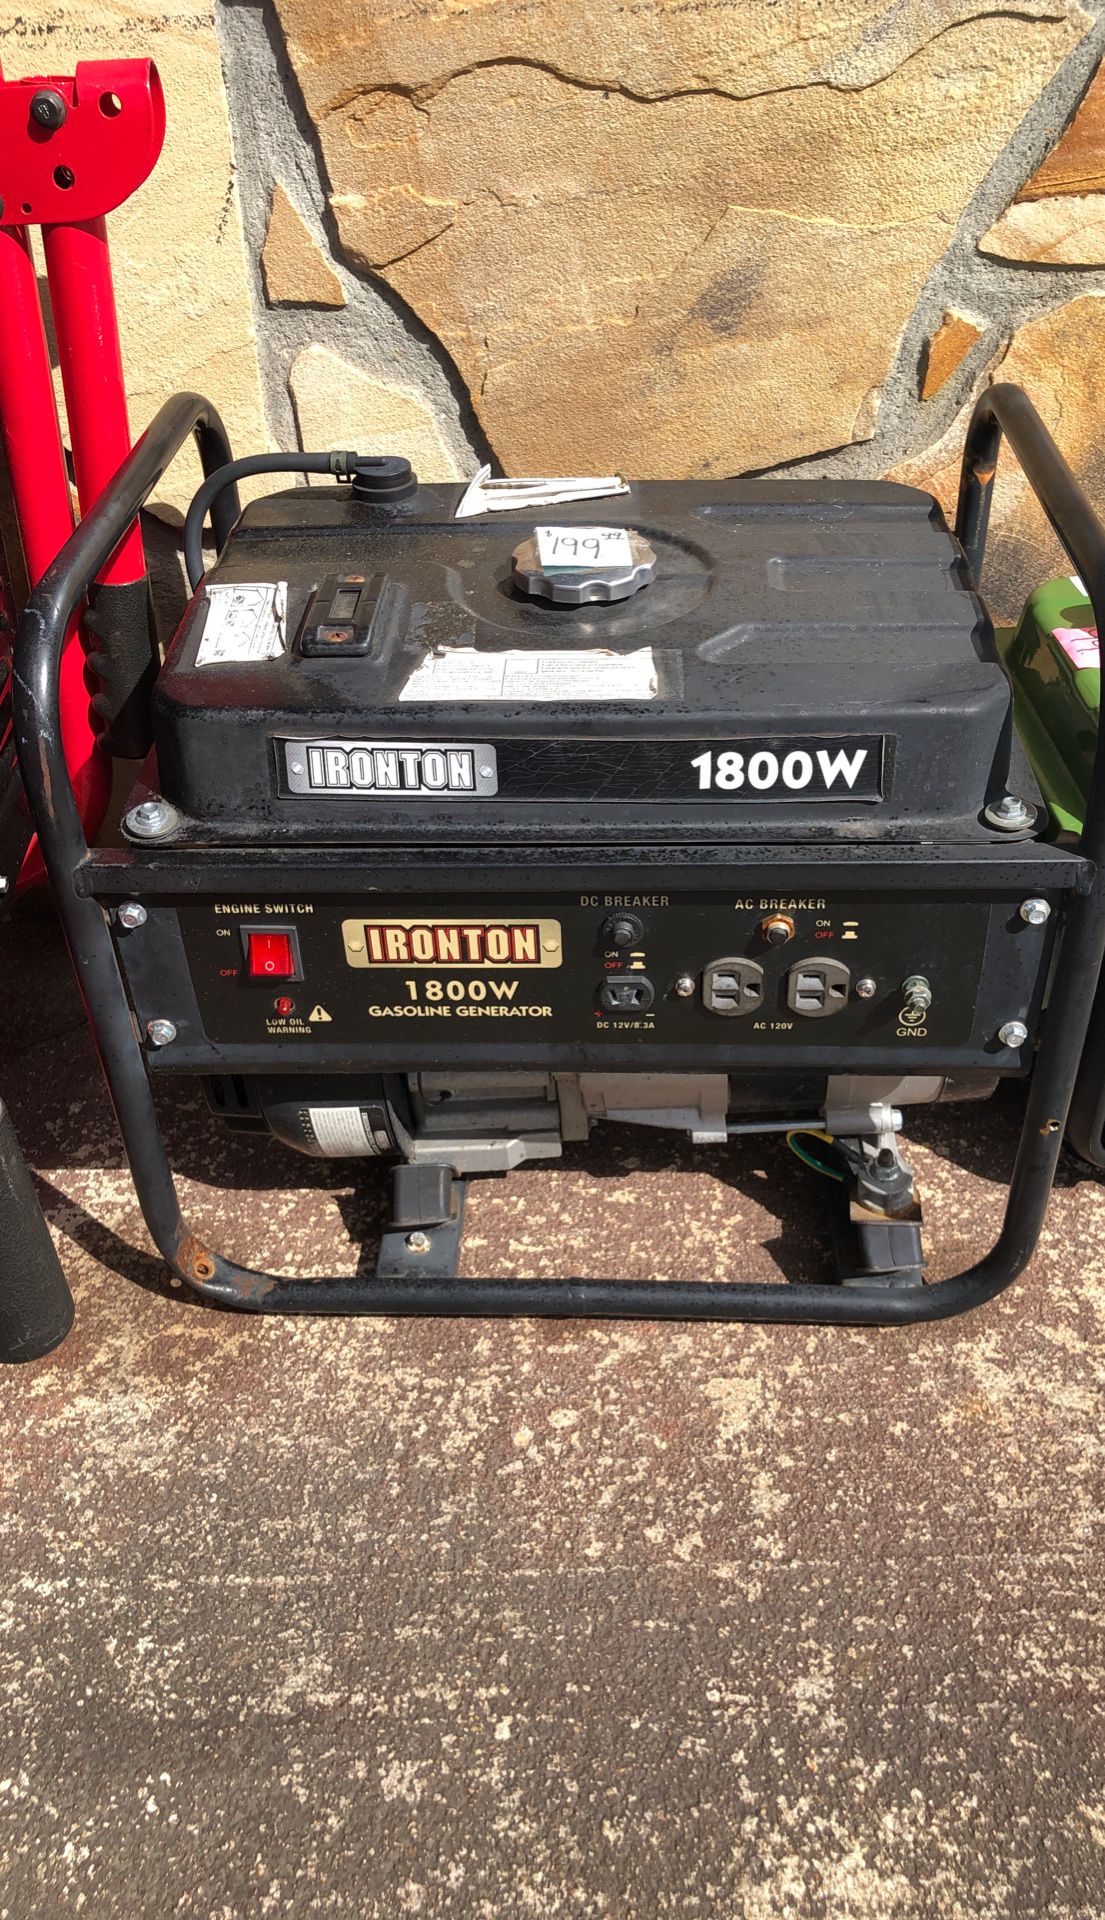 Iron Ton 1800w generator